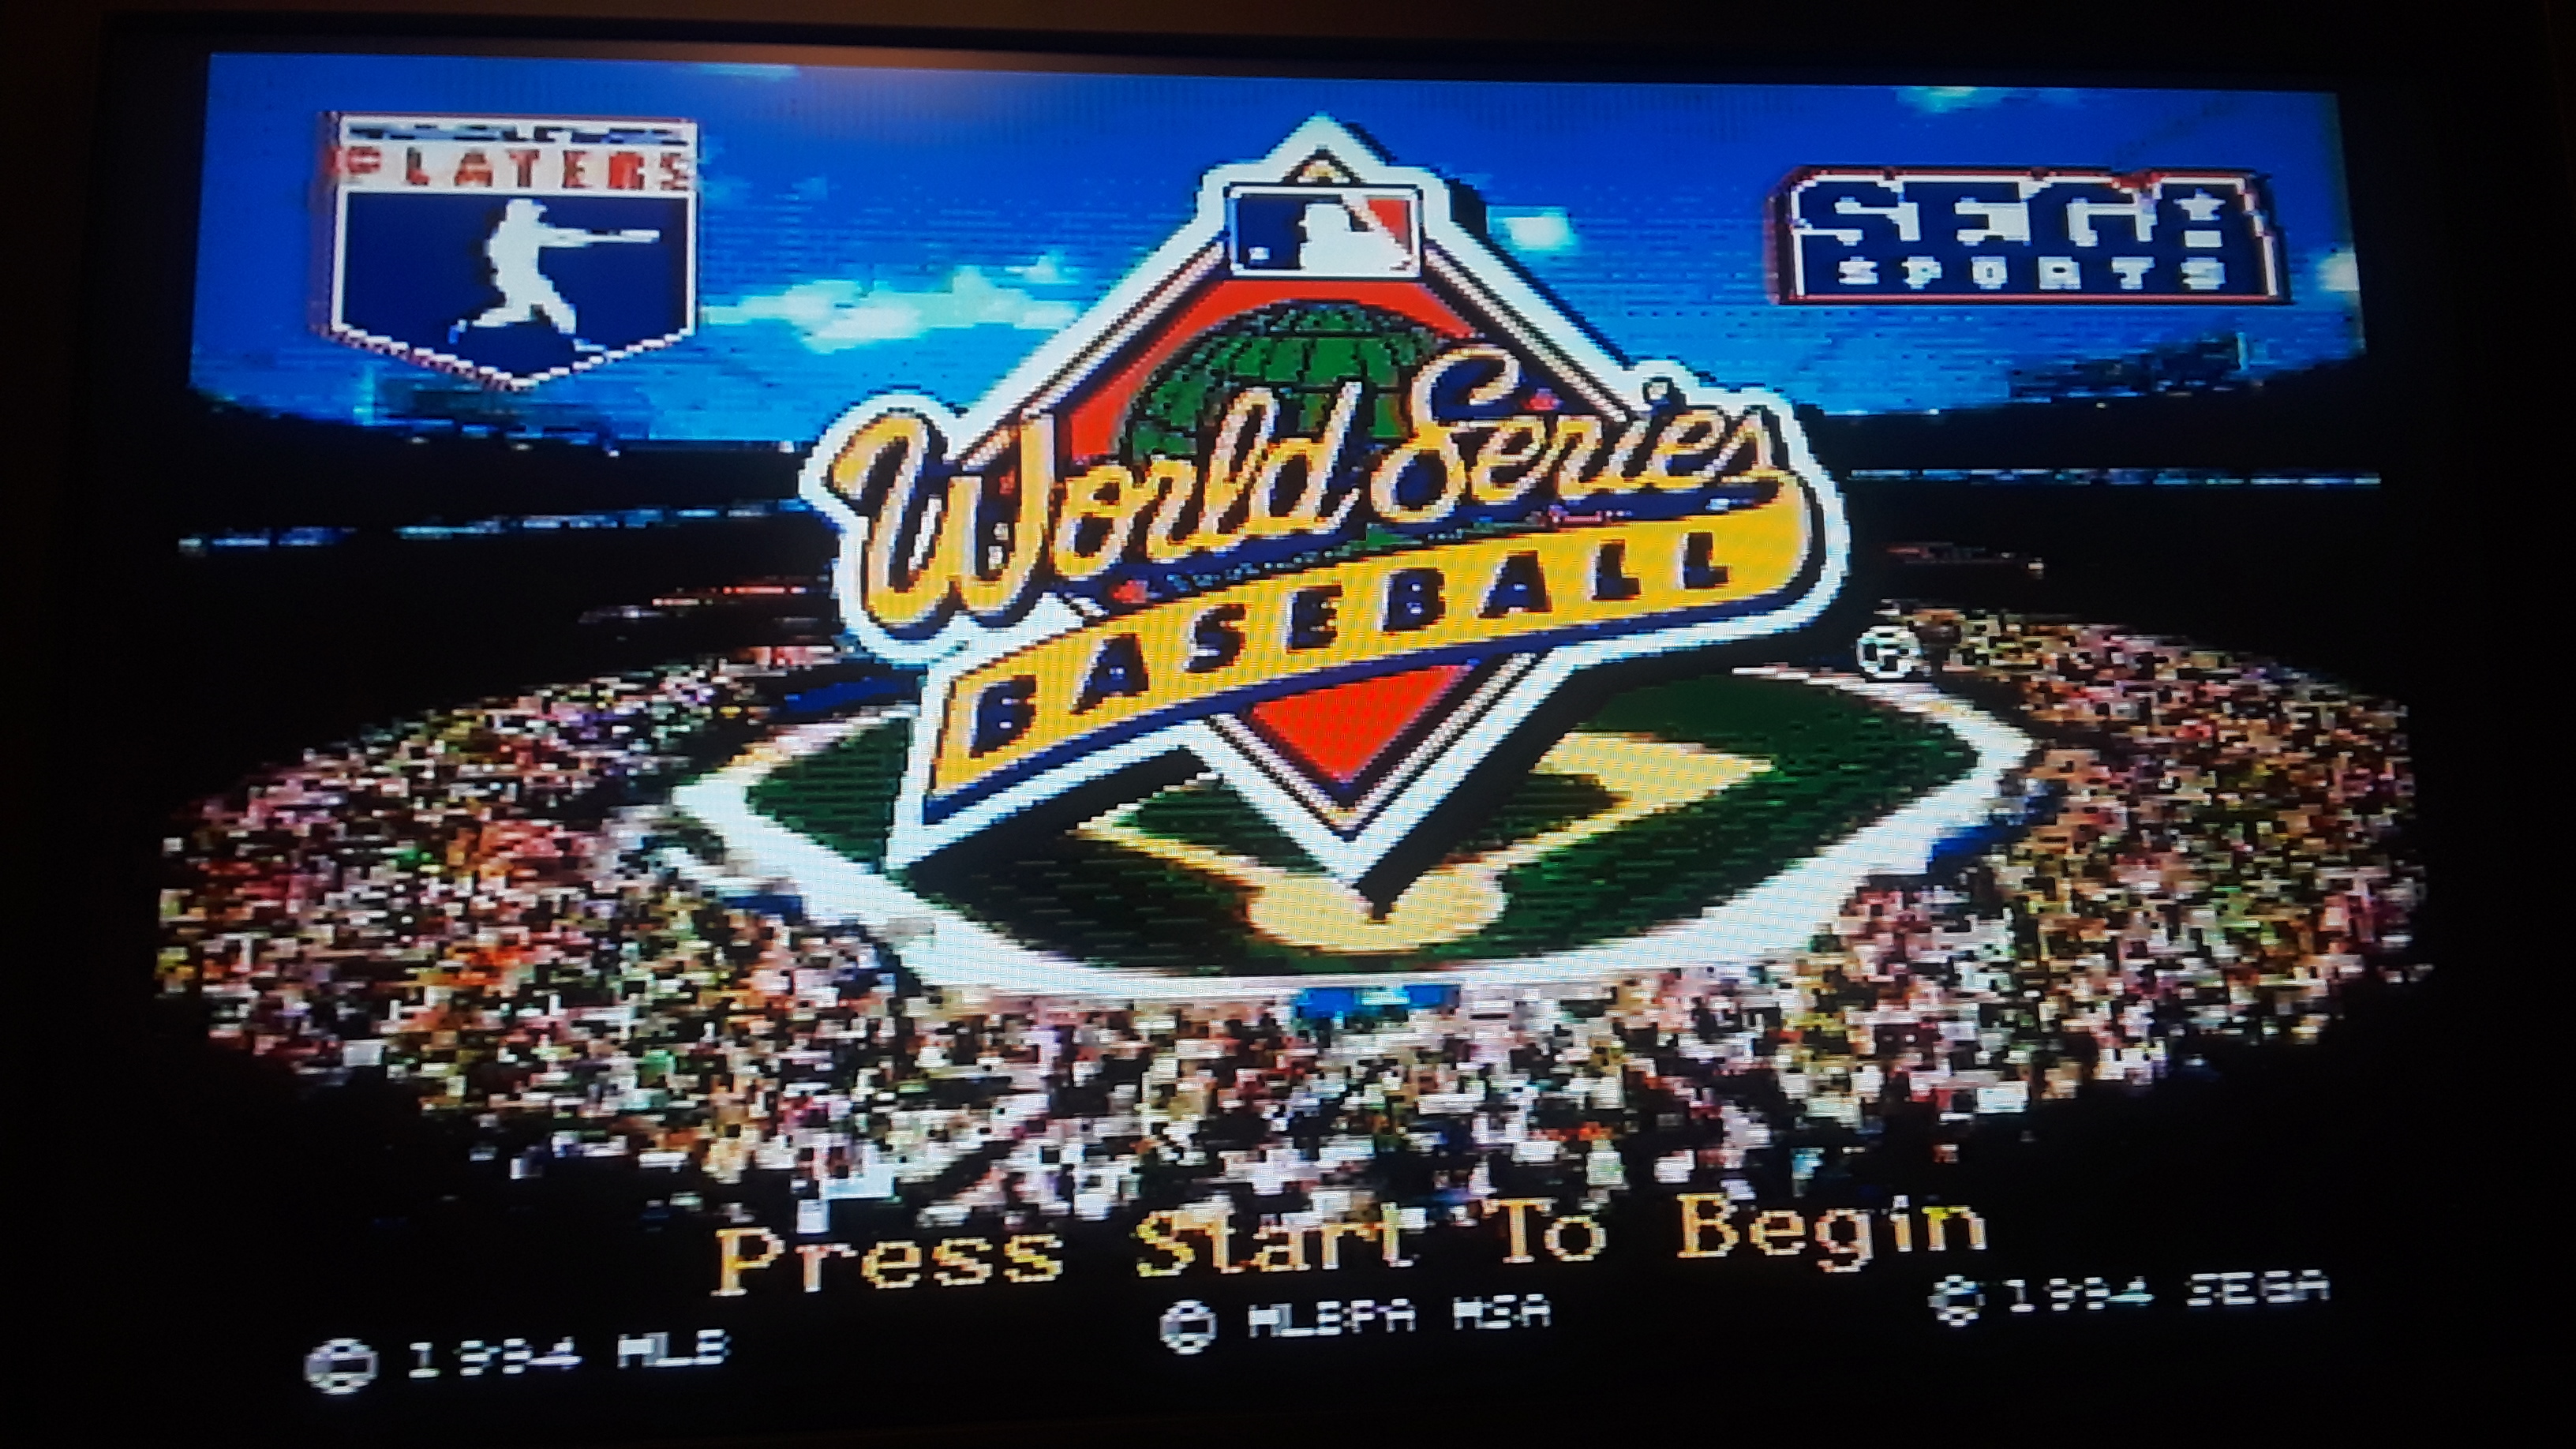 JML101582: World Series Baseball: Home Run Derby [Longest Home Run in Feet] (Sega Genesis / MegaDrive Emulated) 495 points on 2019-11-16 22:38:52